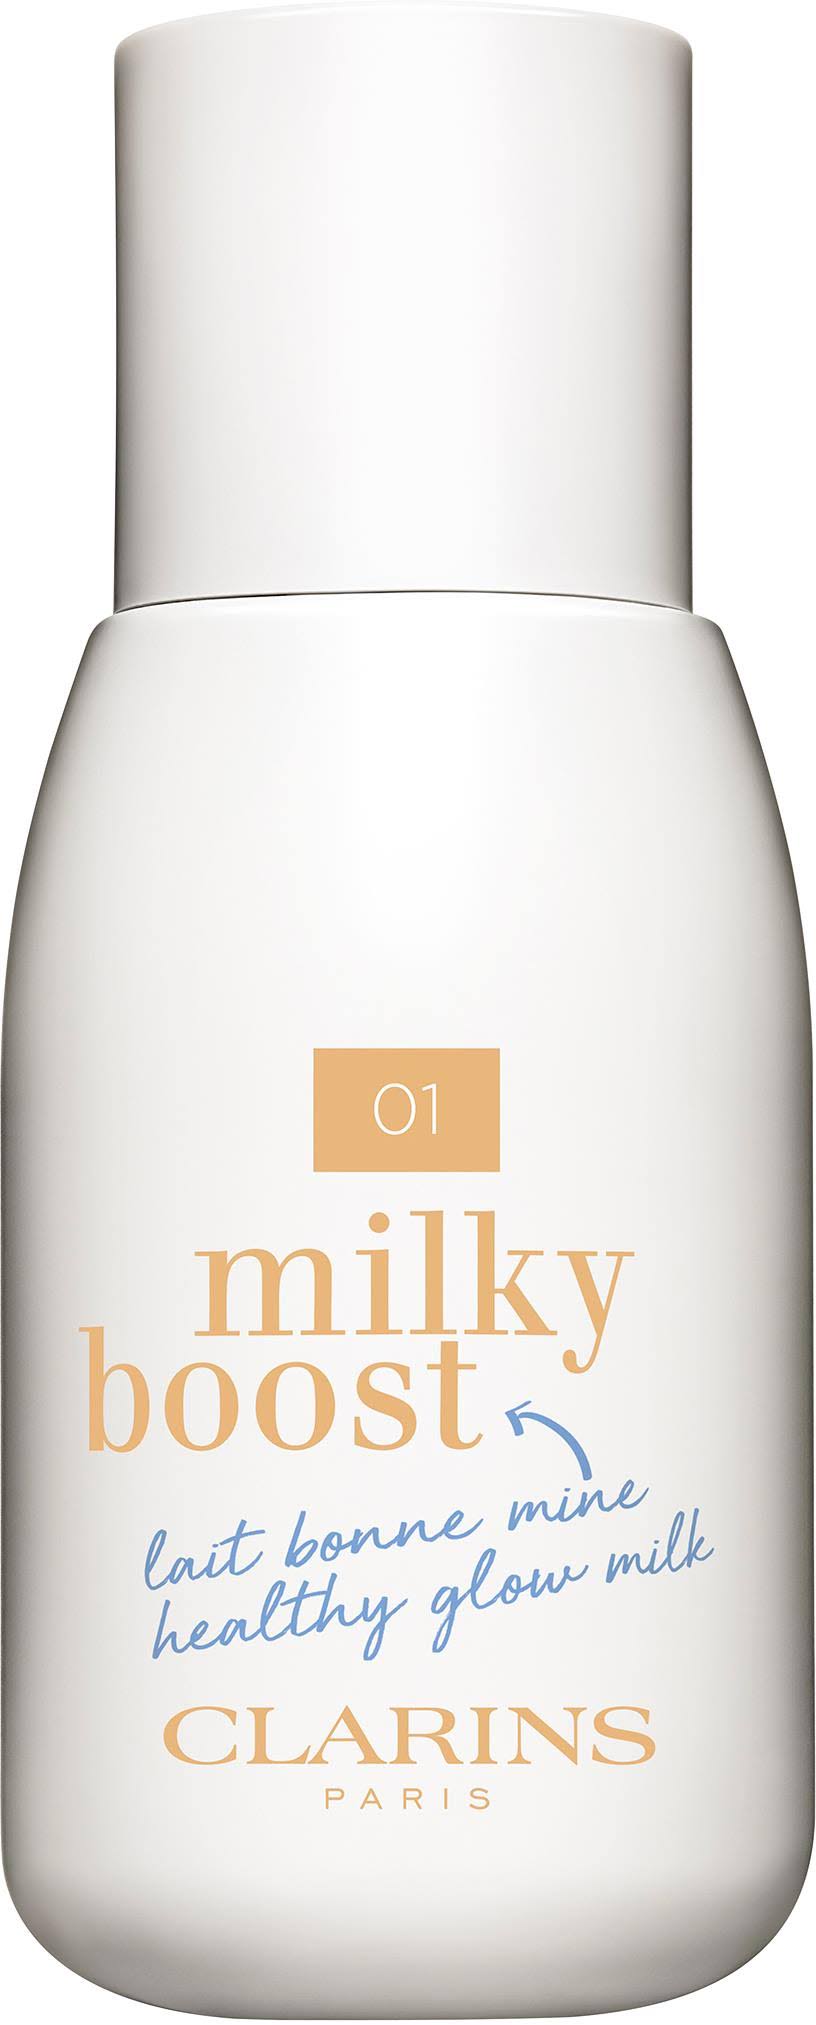 Clarins Milky Boost 01 milky cream, 50 ml